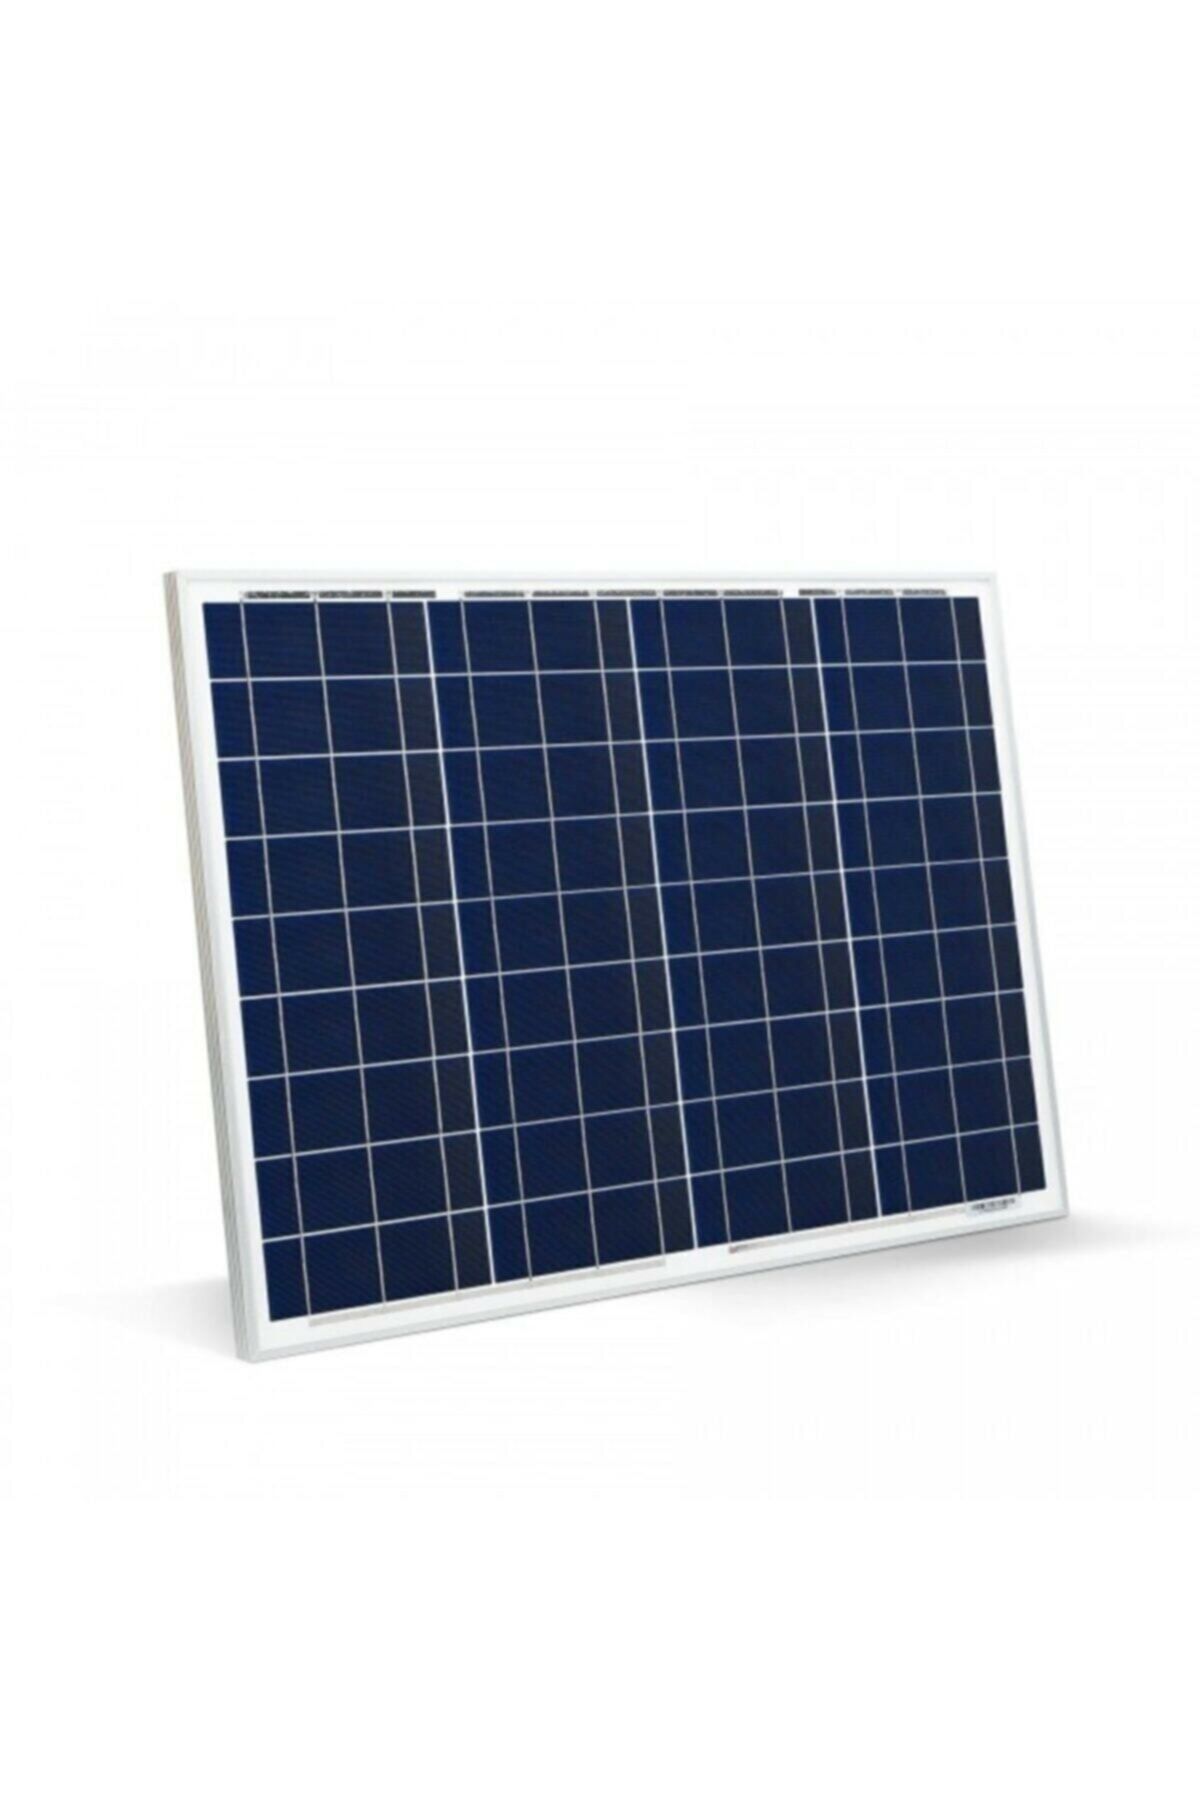 URETECH 65 Watt Polikristal Güneş Paneli